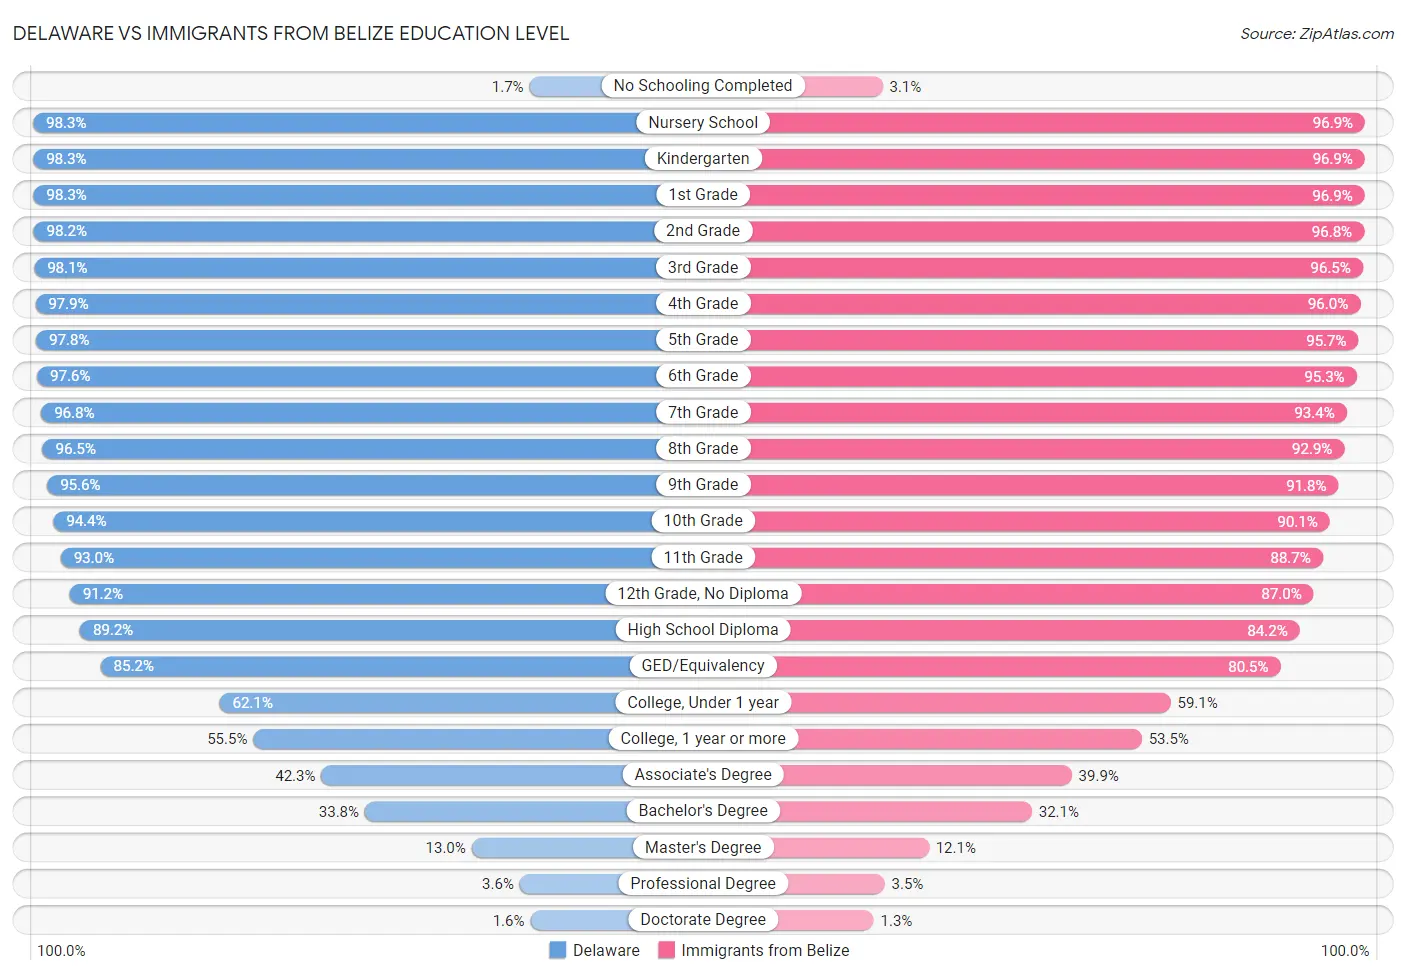 Delaware vs Immigrants from Belize Education Level